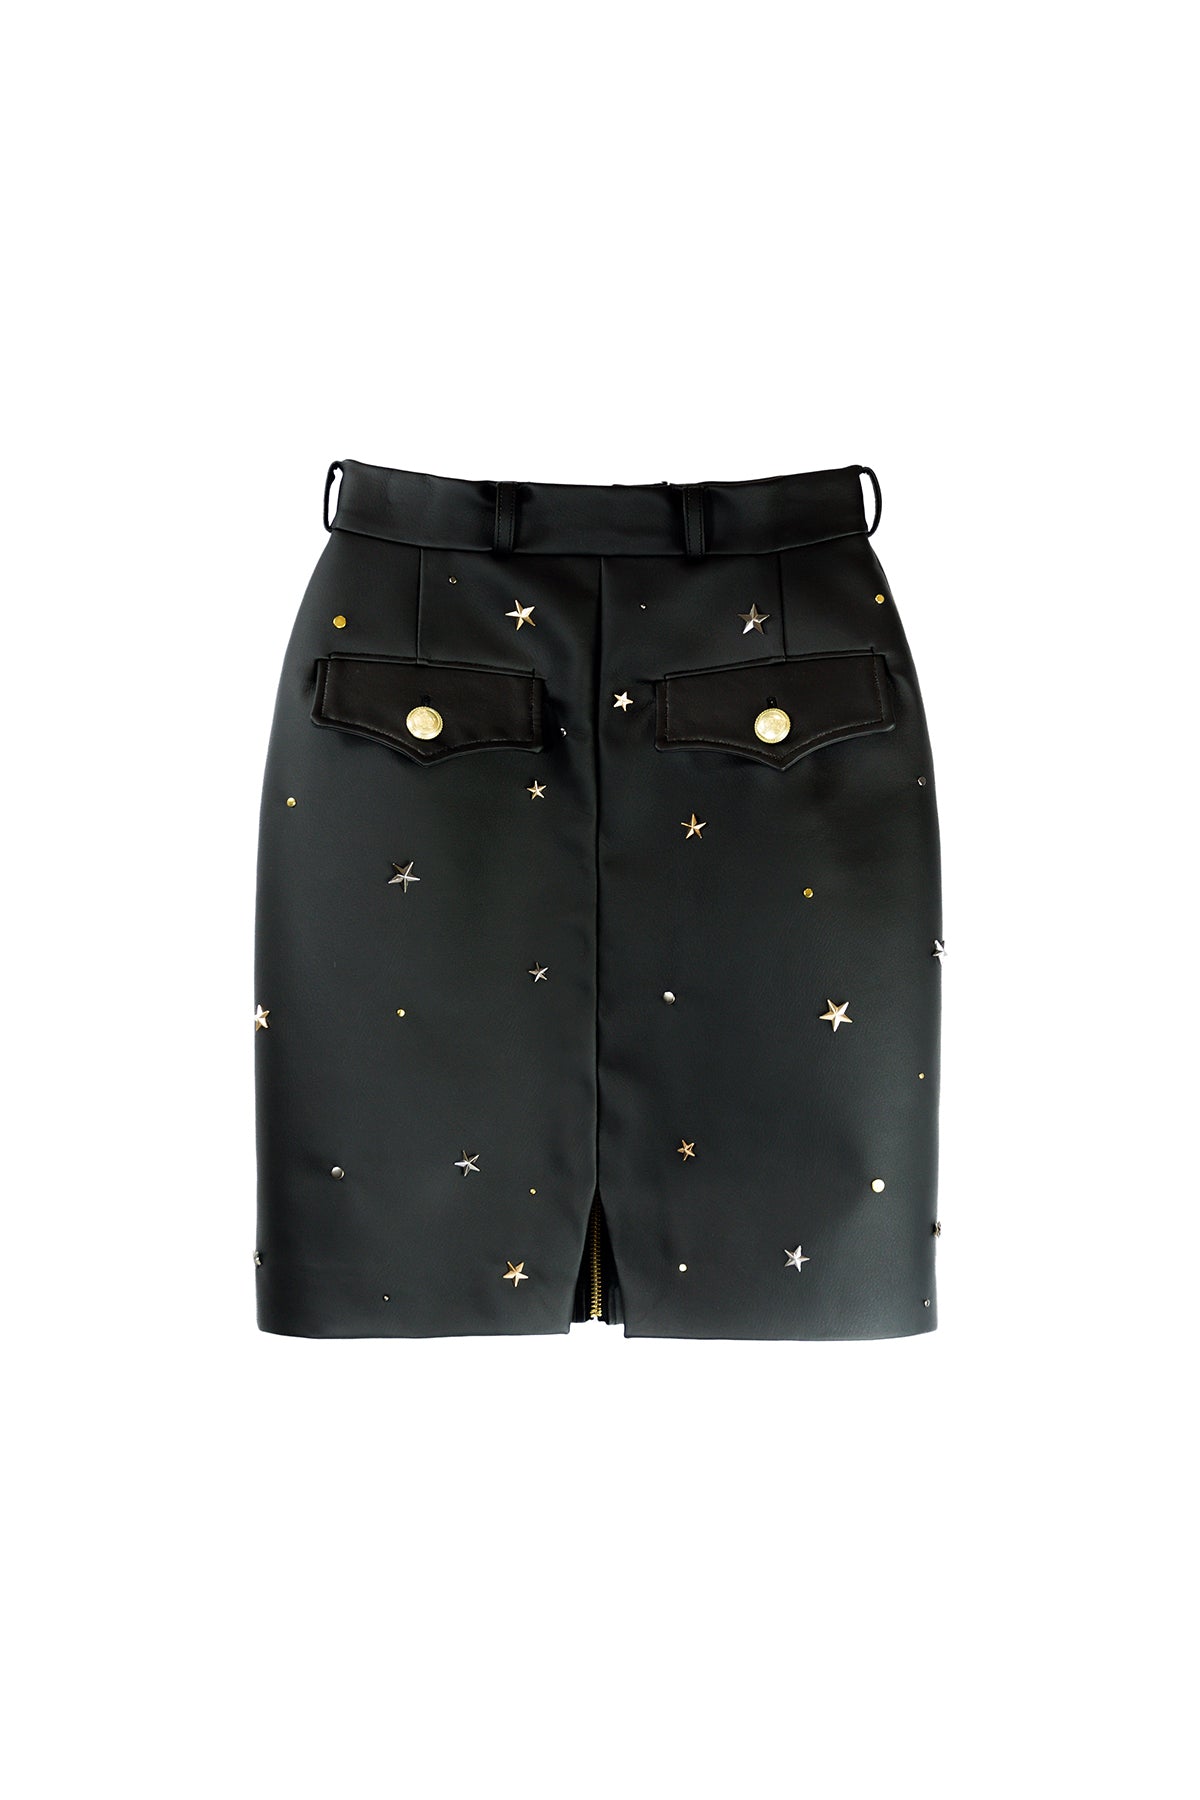 Military Skirt in Imitation Leather "SPACE" - Black - Manuel Essl Design